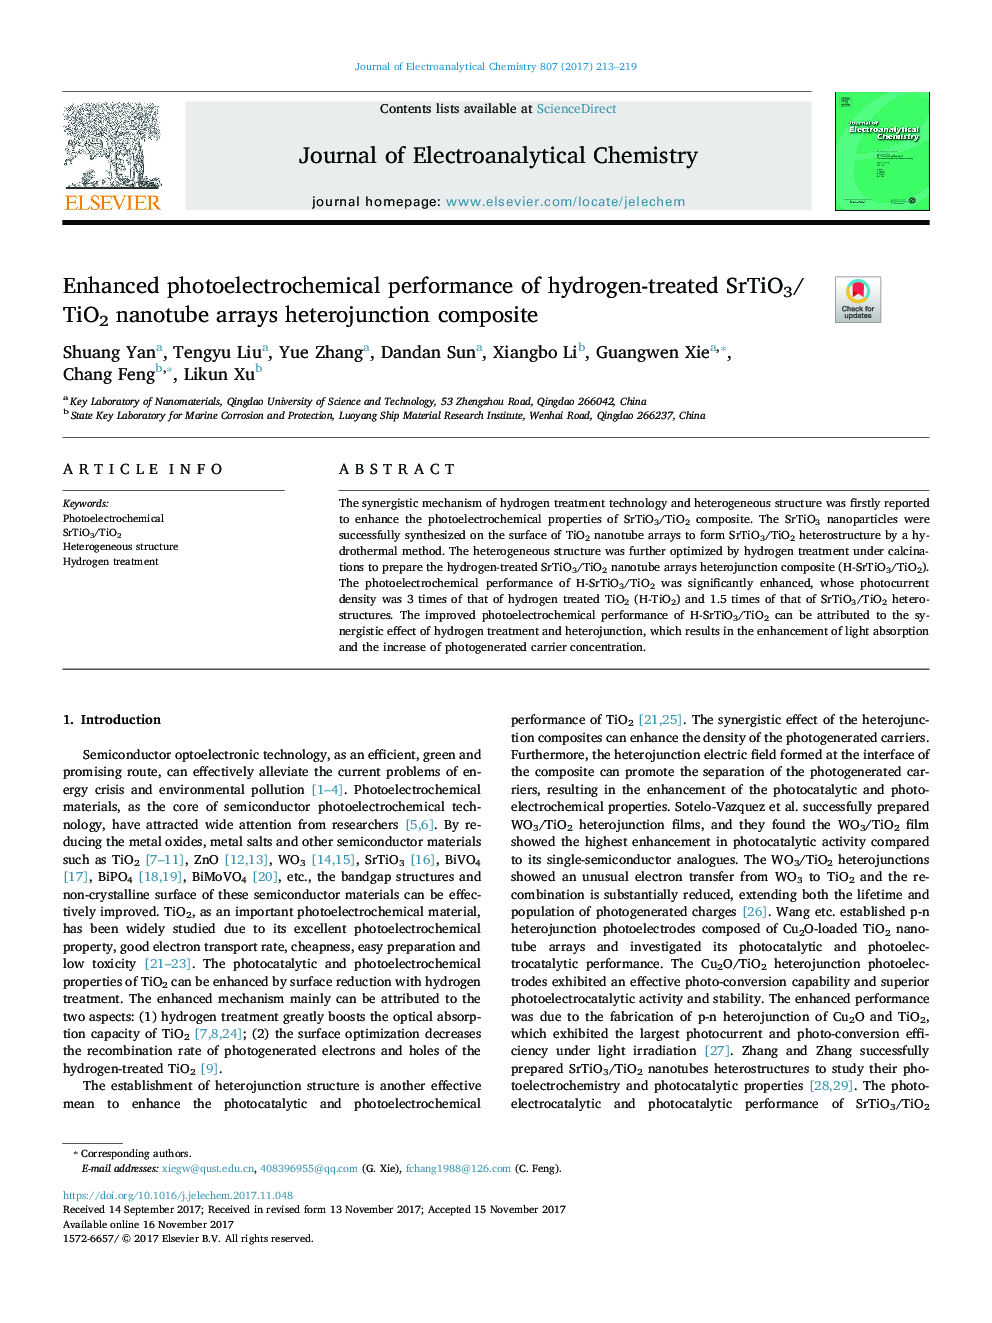 Enhanced photoelectrochemical performance of hydrogen-treated SrTiO3/TiO2 nanotube arrays heterojunction composite